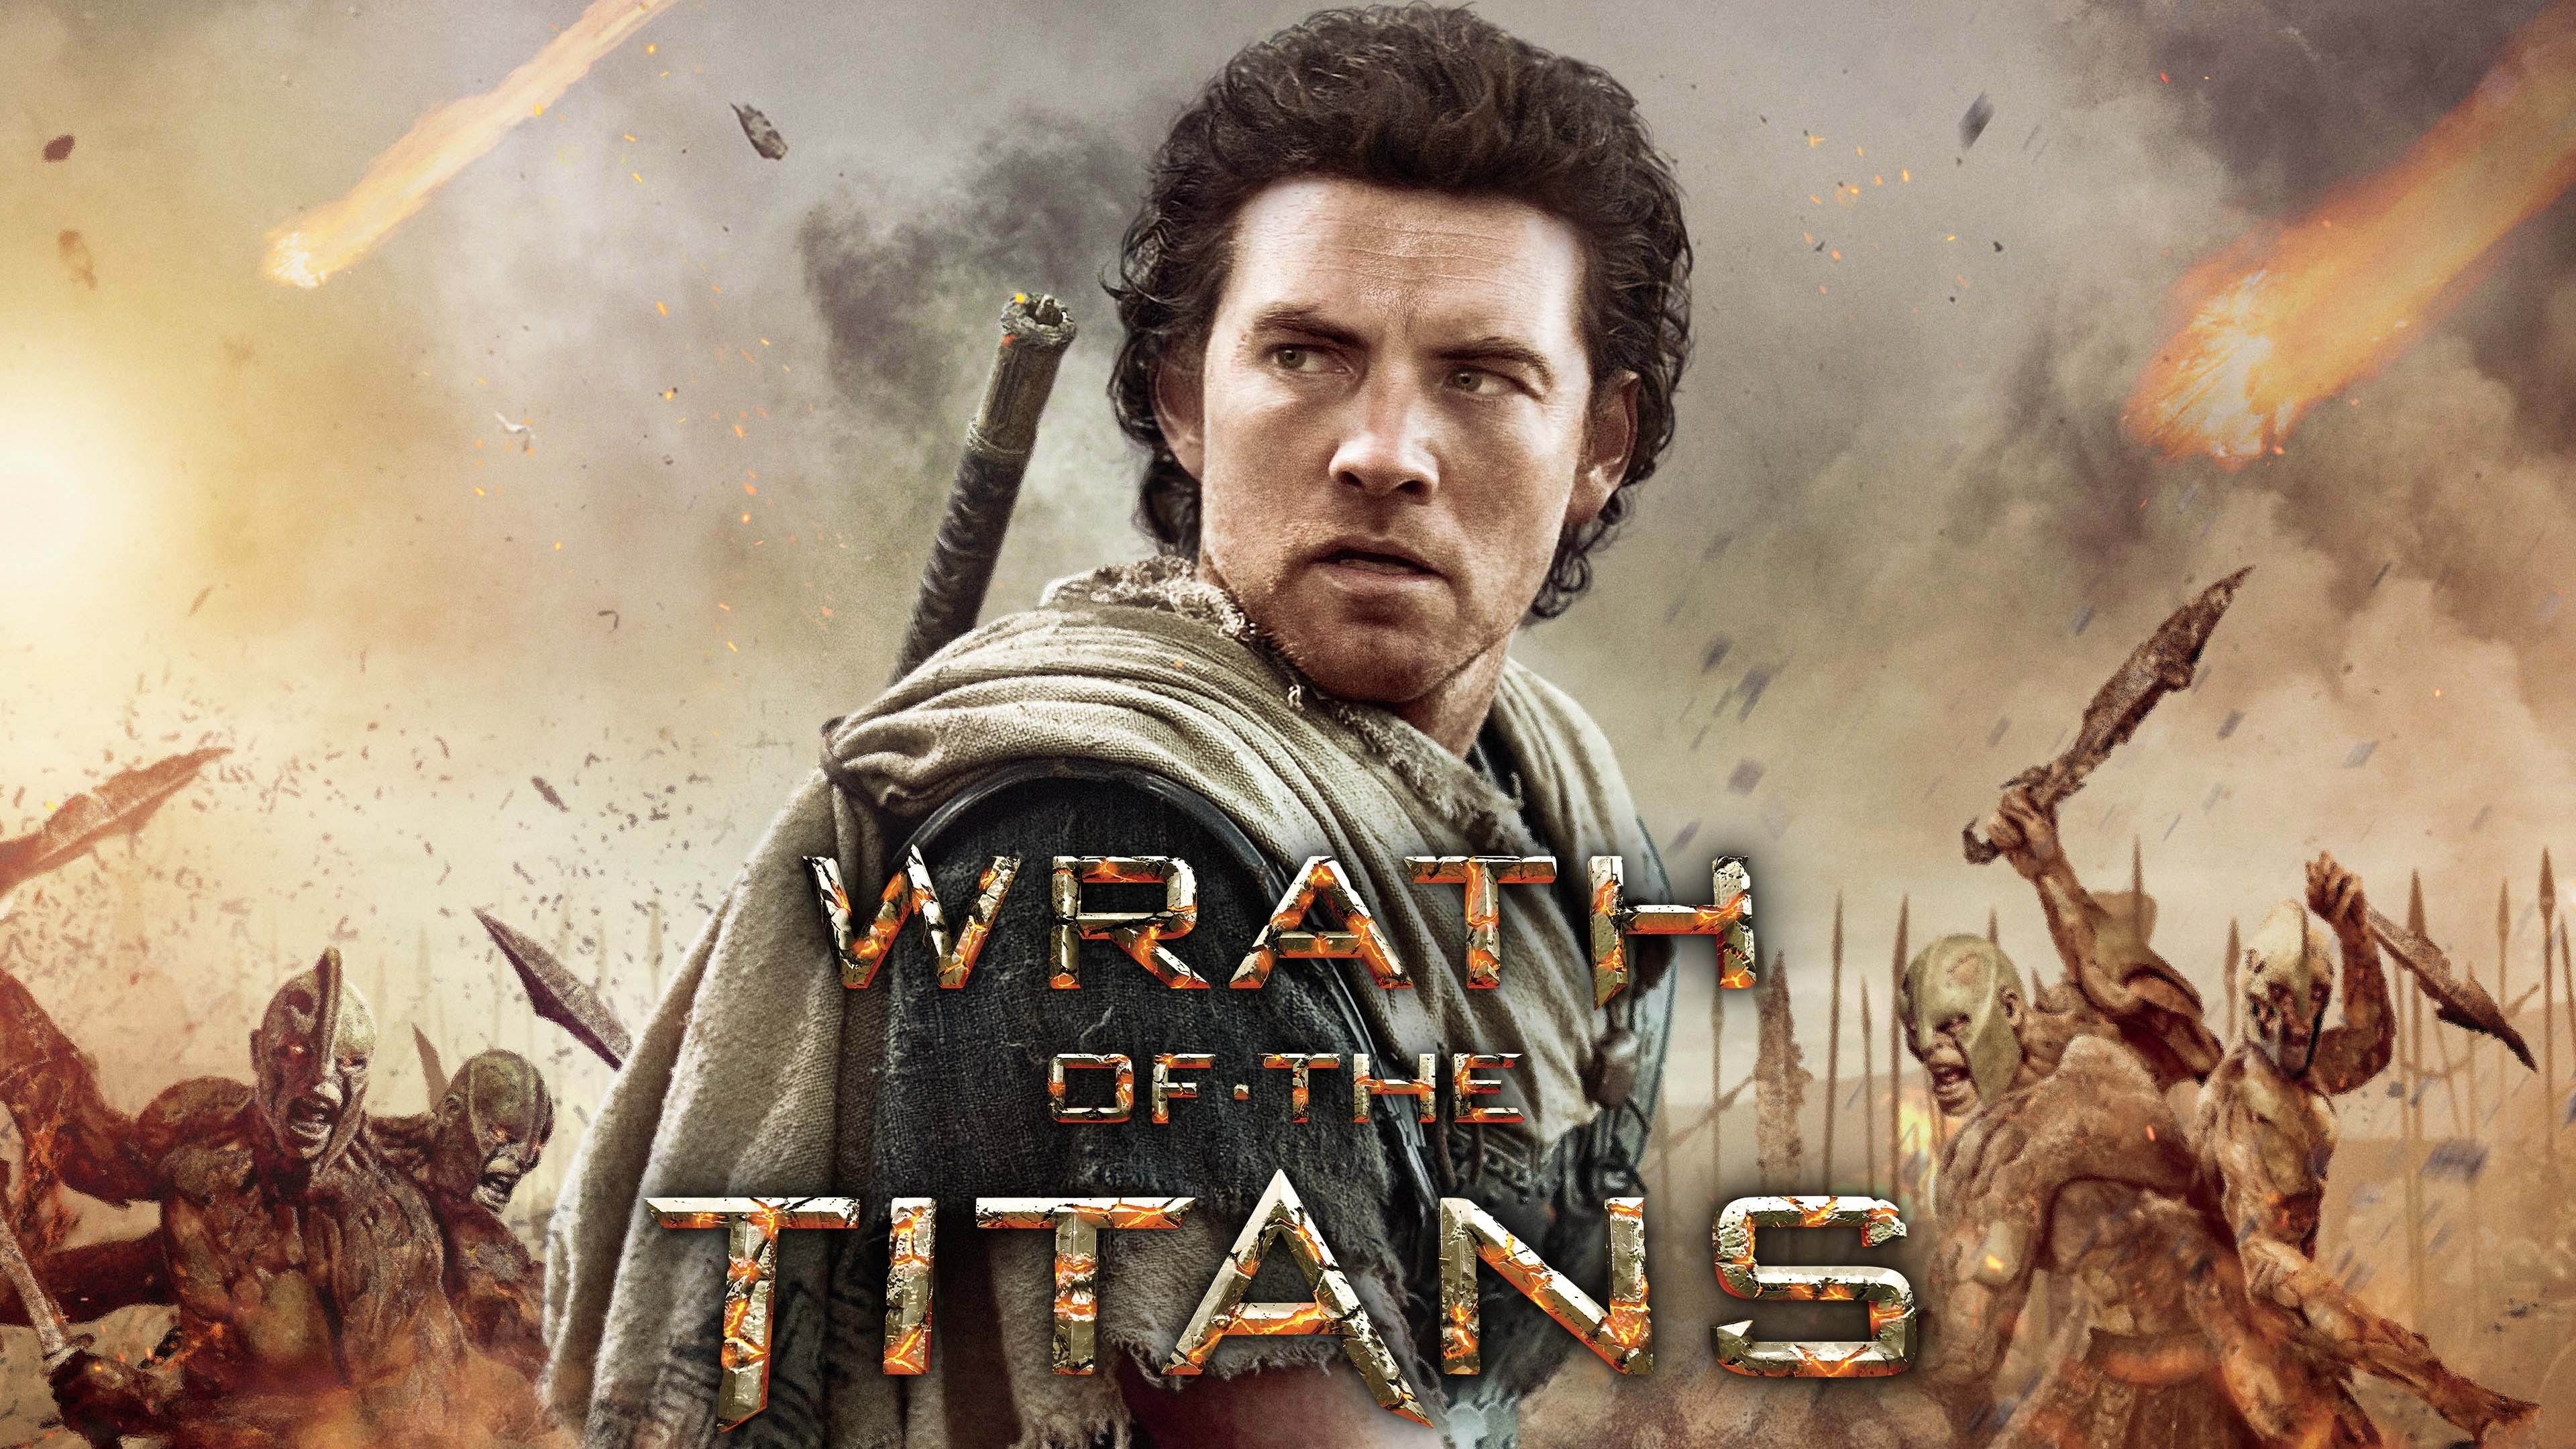 Reviews: Wrath of the Titans - IMDb